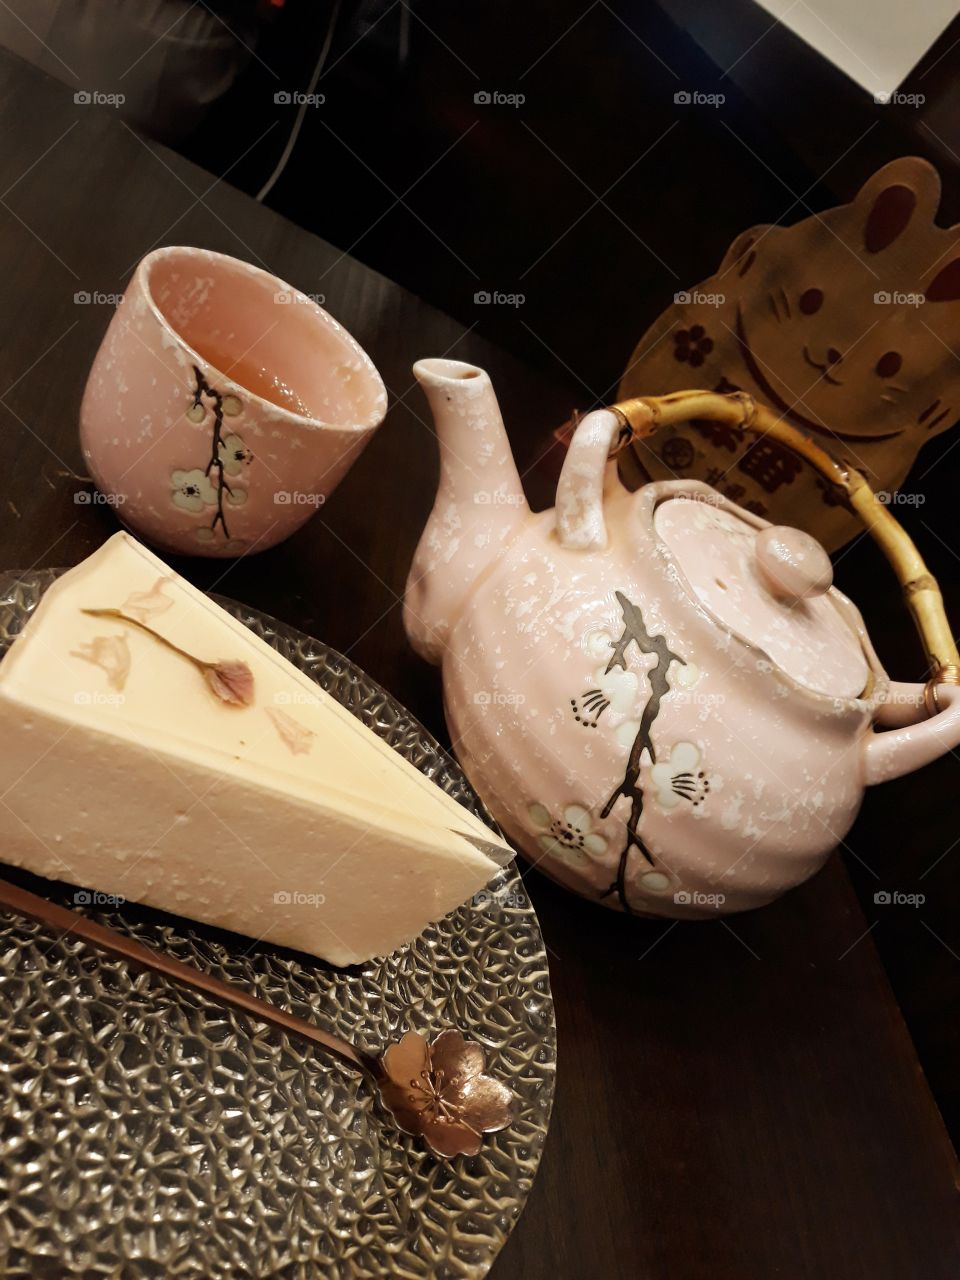 Have a nice sakura fried tea and sakura cake. It's beautiful, relaxing, and joyable.